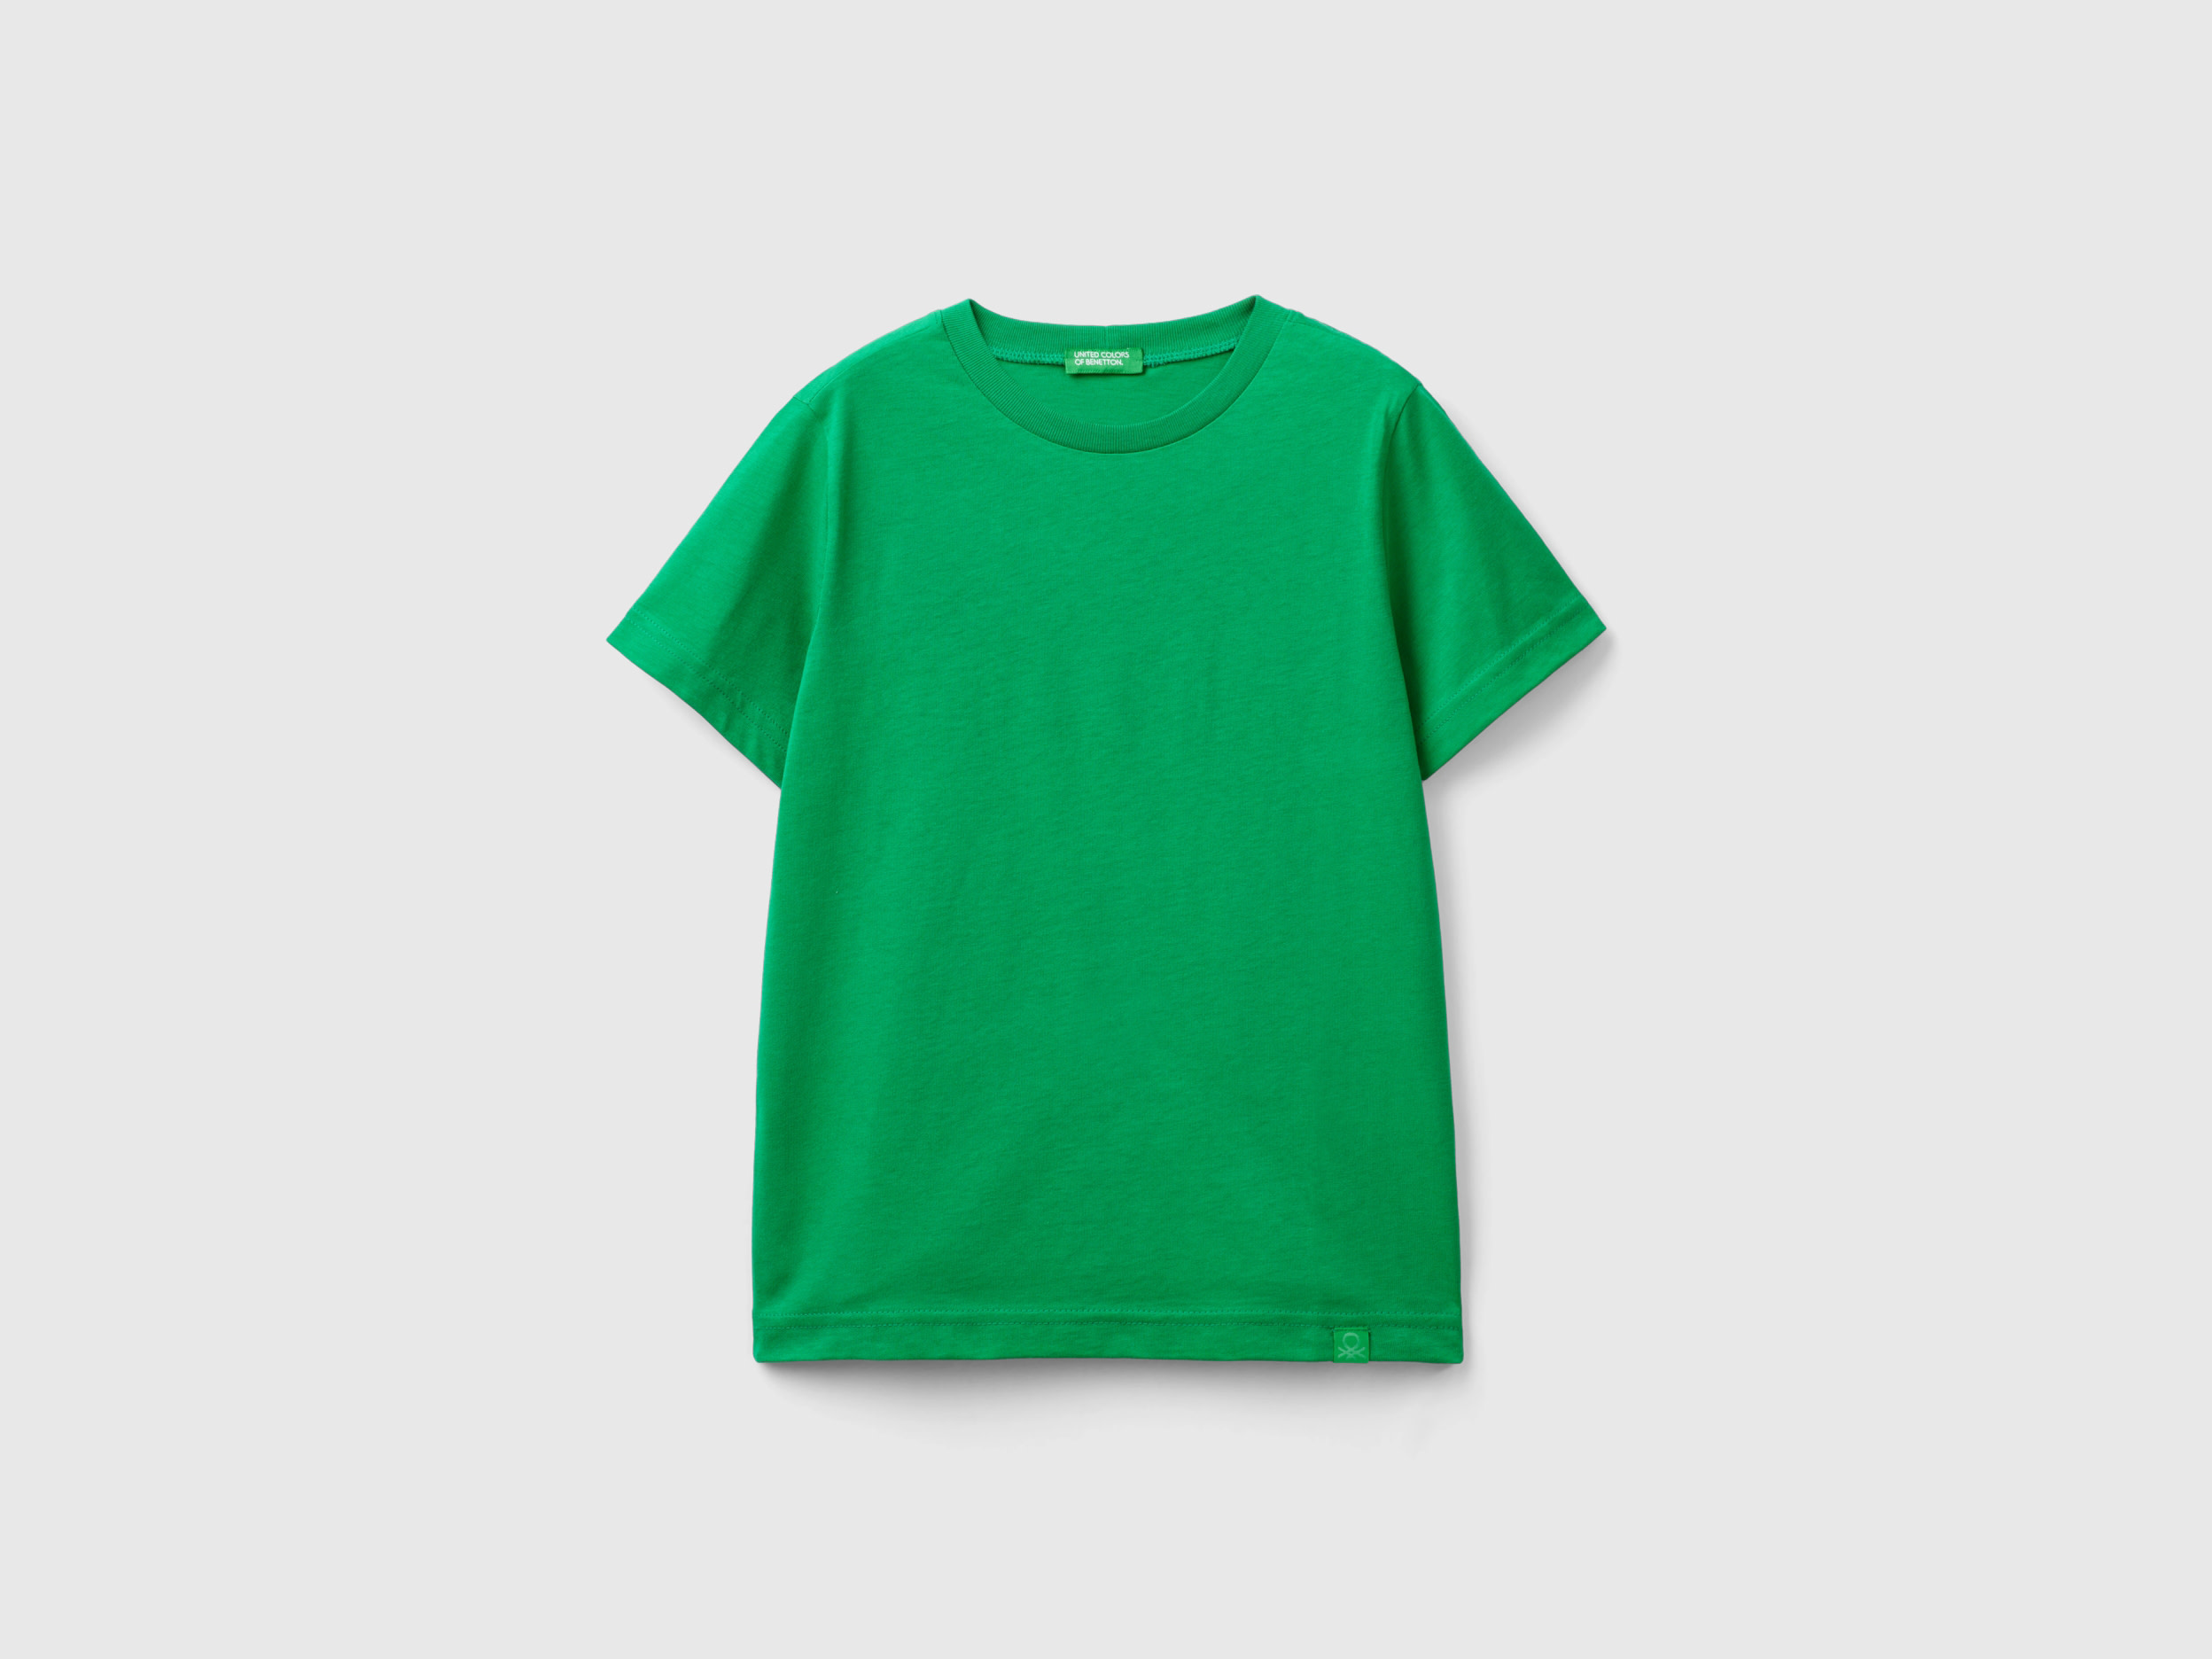 Image of Benetton, Organic Cotton T-shirt, size 2XL, Green, Kids